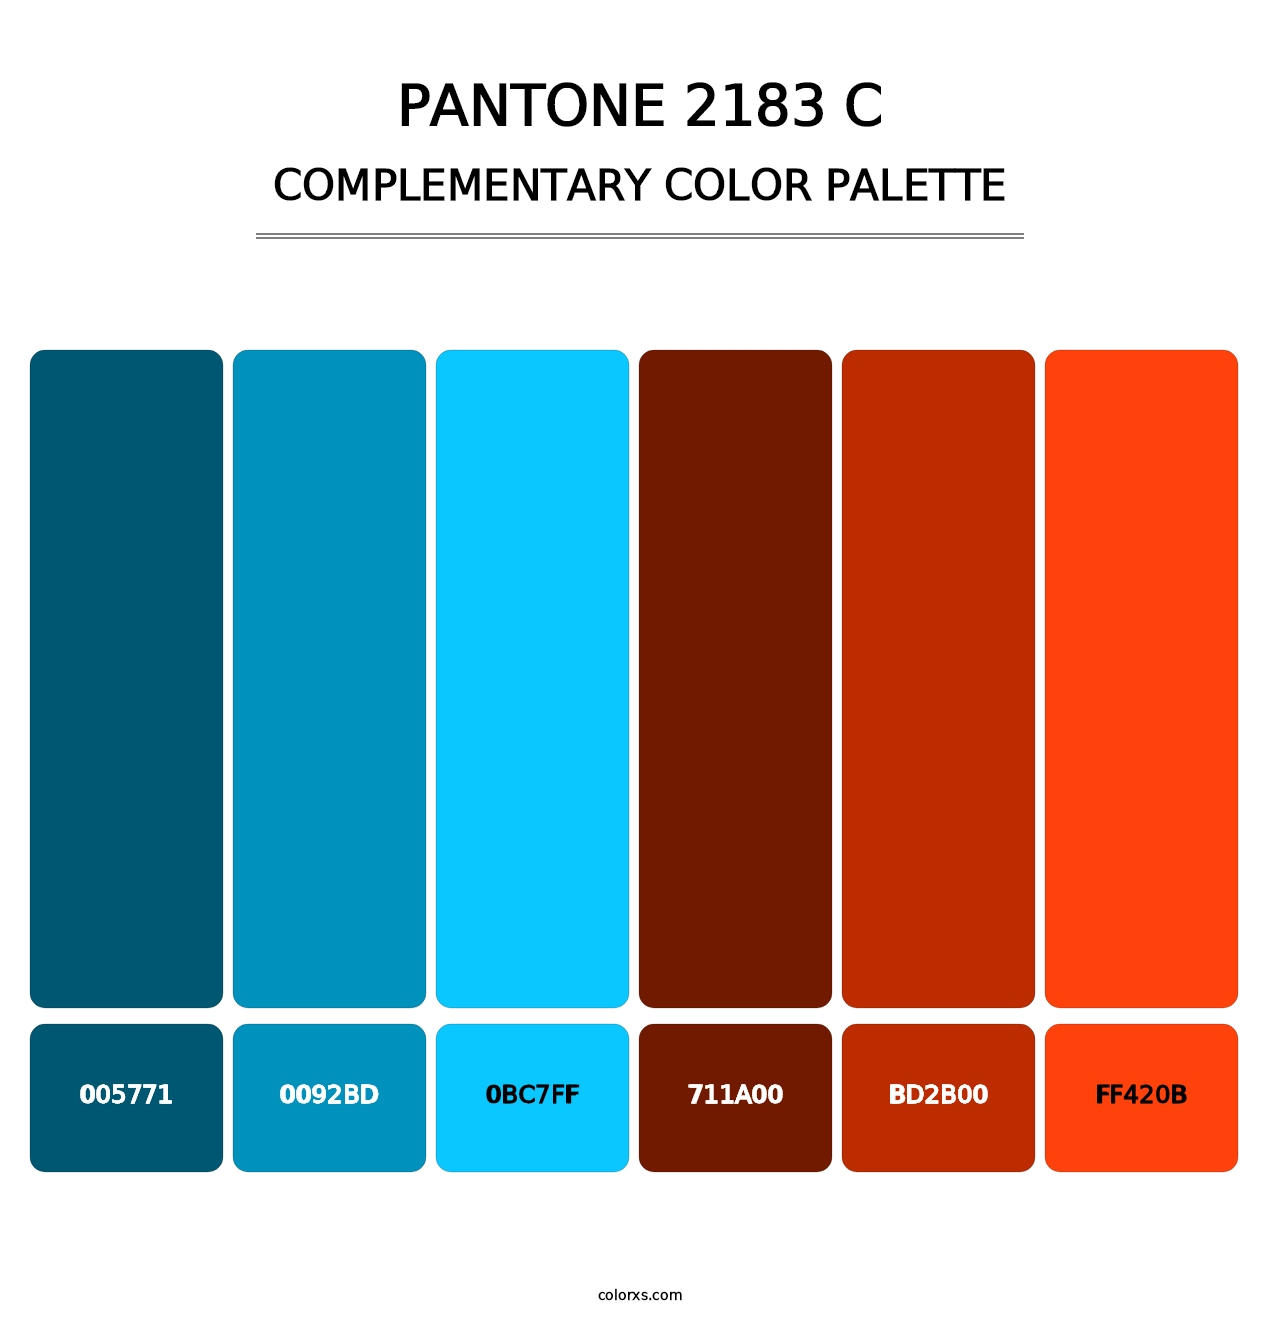 PANTONE 2183 C - Complementary Color Palette